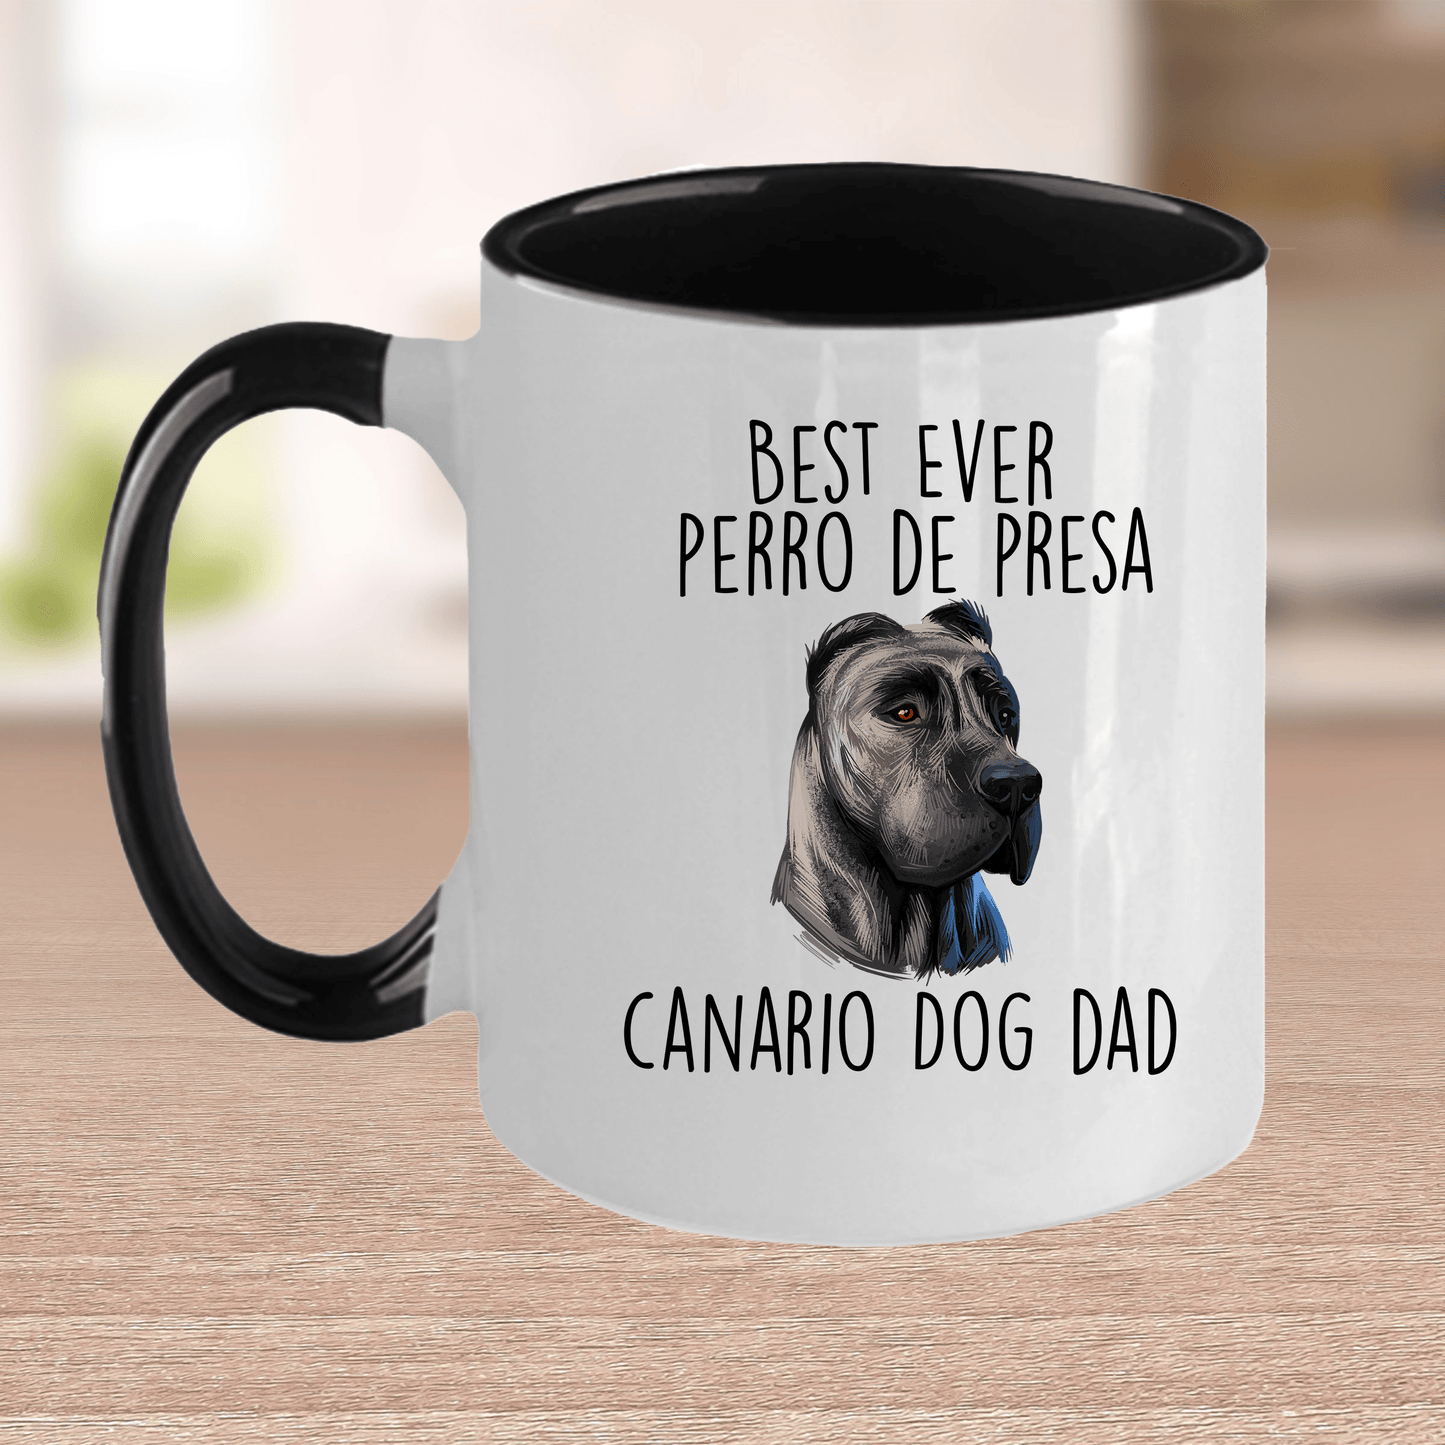 Best Ever Perro de Presa Canario Dog Dad Ceramic Coffee Mug